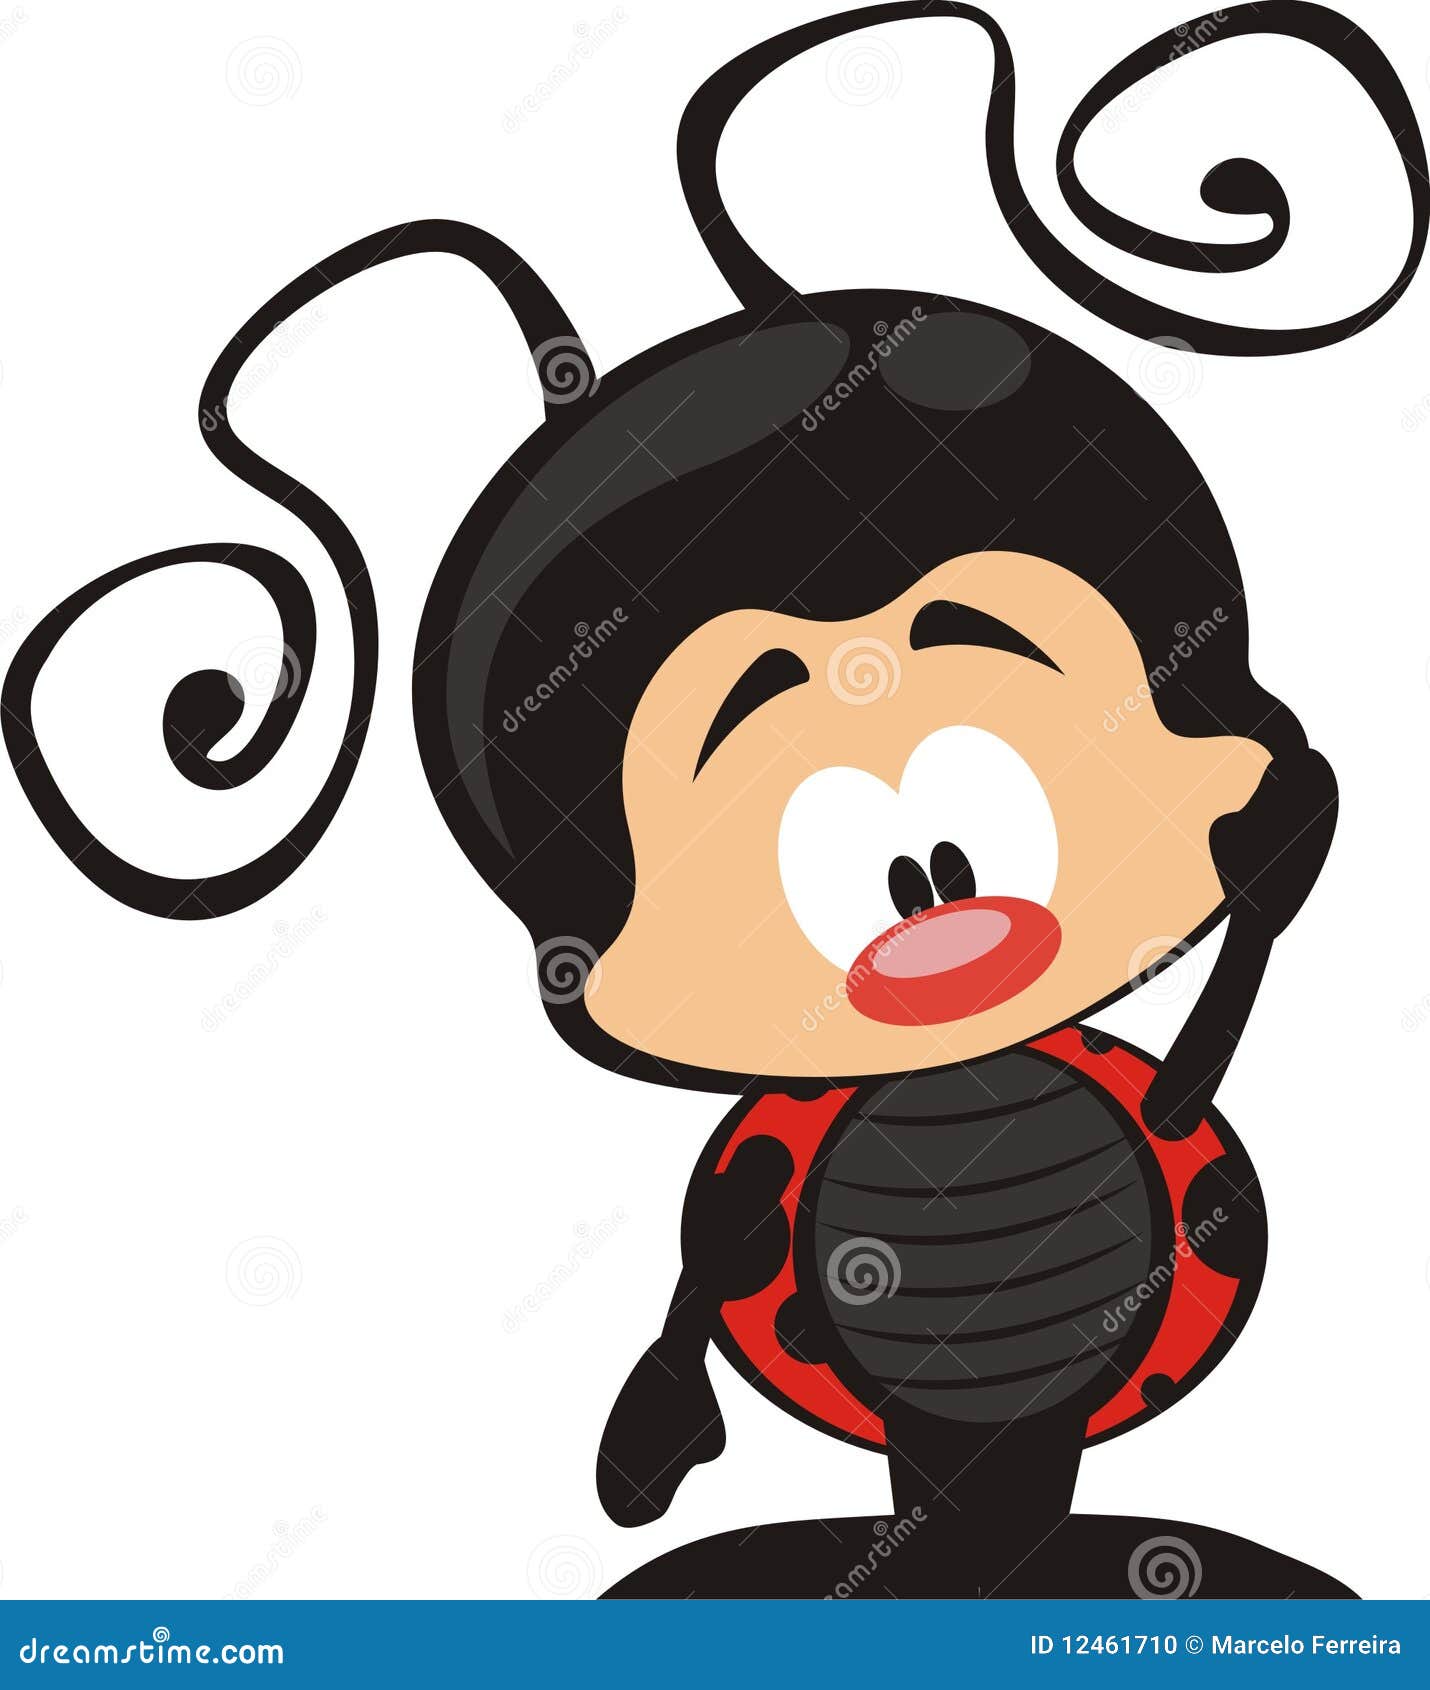 Ladybug cartoon stock vector. Illustration of character - 12461710